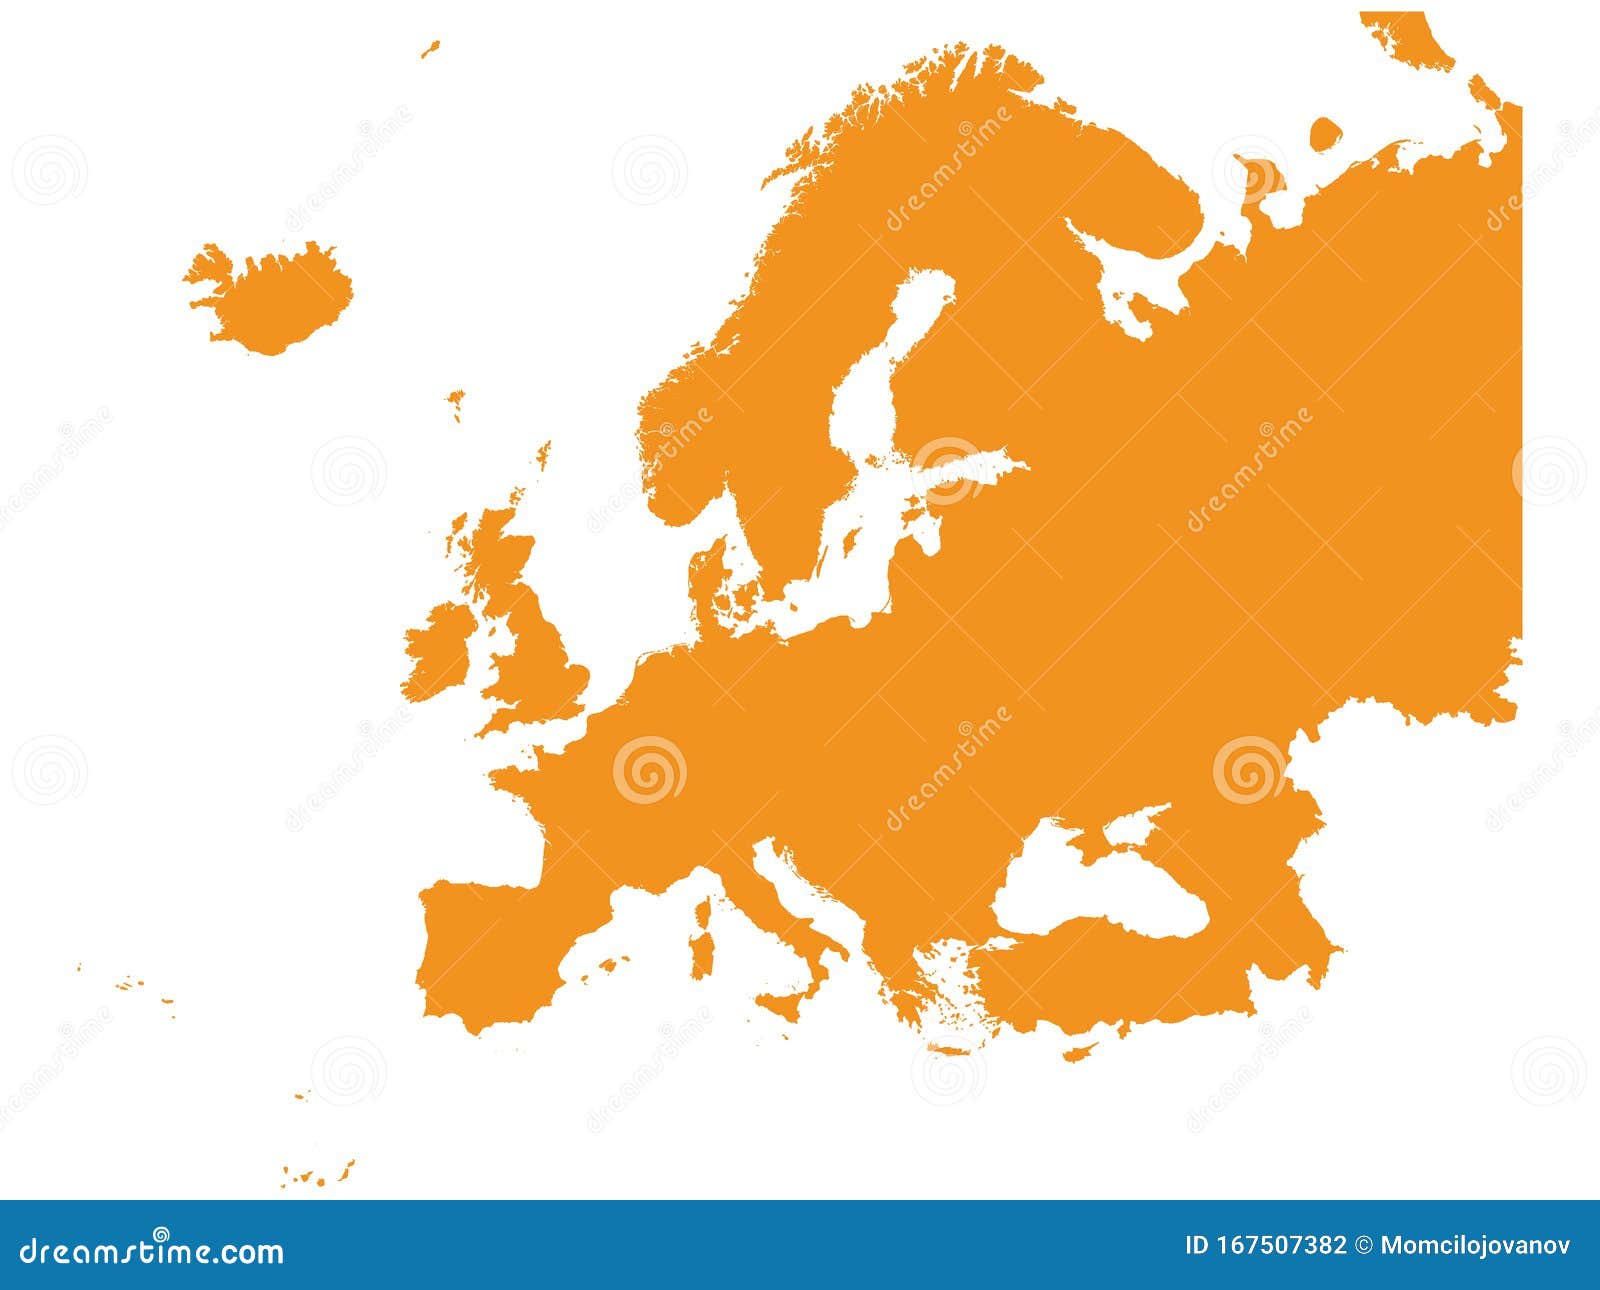 Orange Map Of Europe Stock Vector Illustration Of Europe 167507382